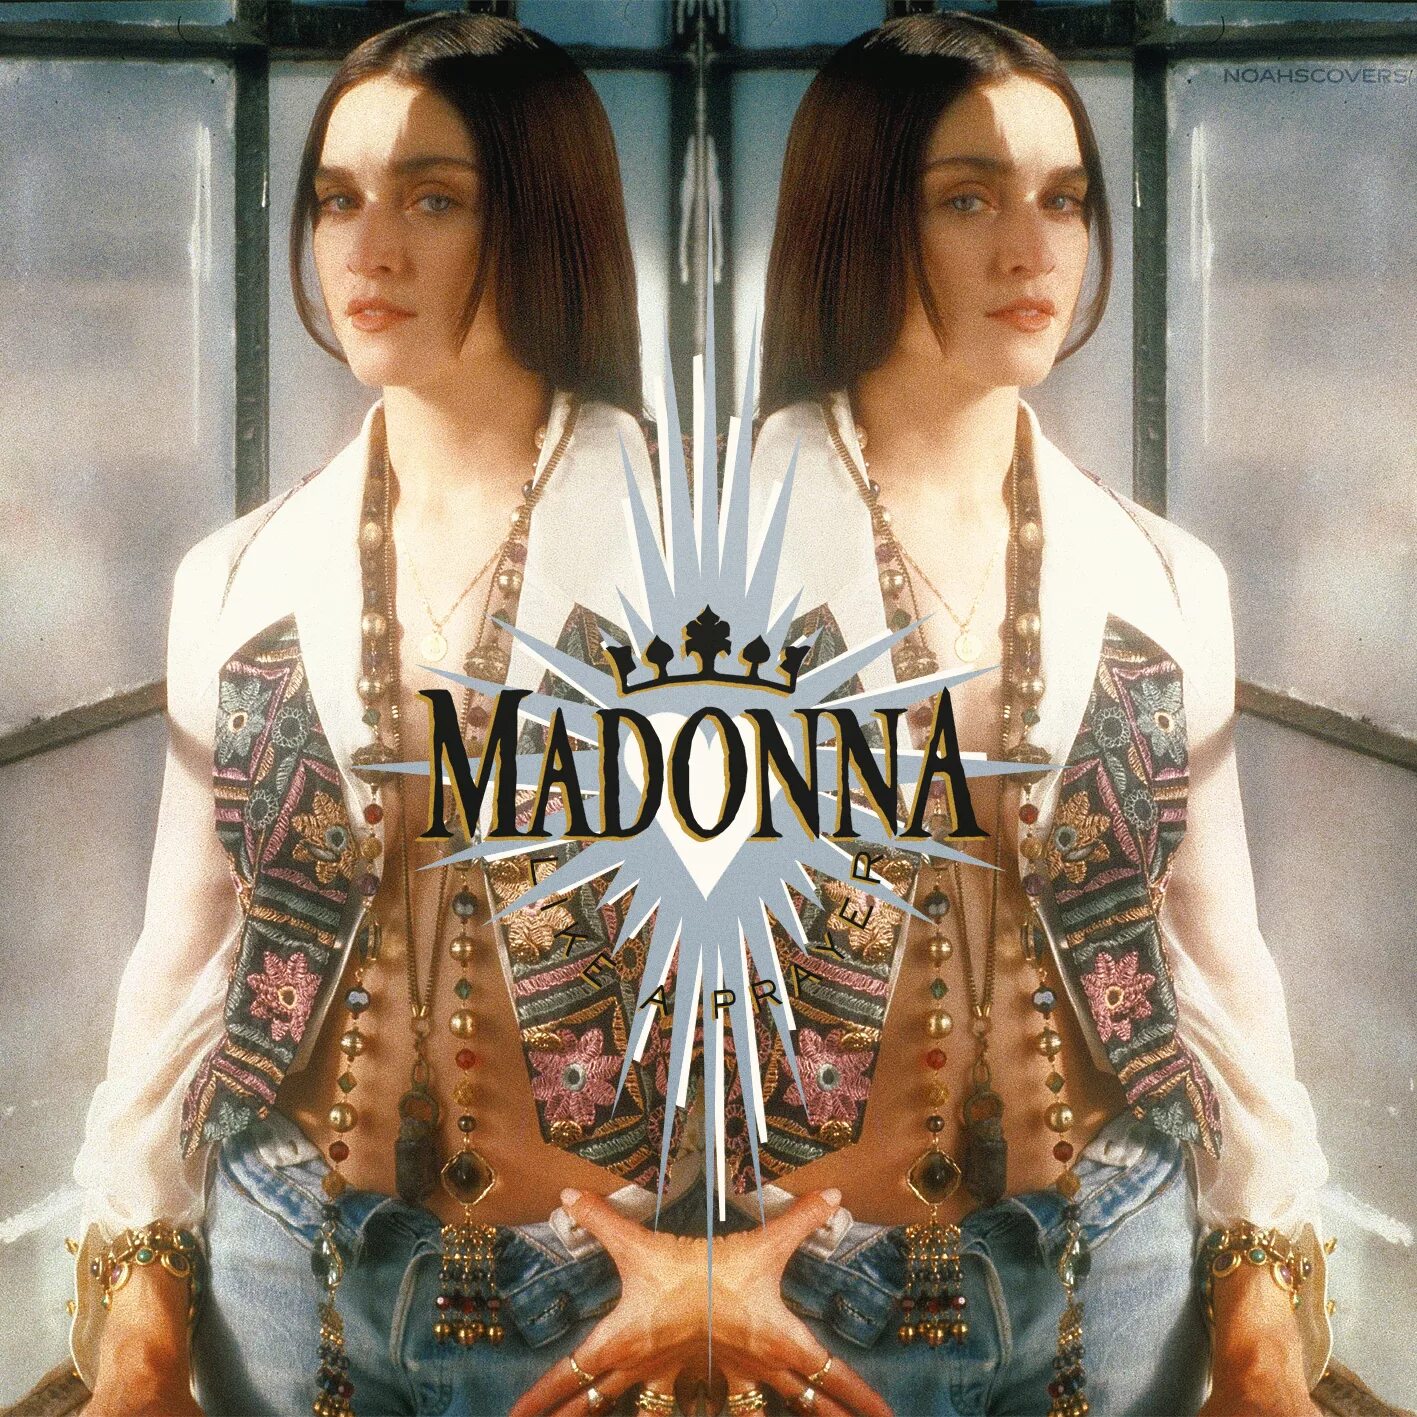 Like madonna песня. Мадонна like a Prayer. Madonna like a Prayer album. Мадонна альбом like a Prayer. Madonna like a Prayer обложка.